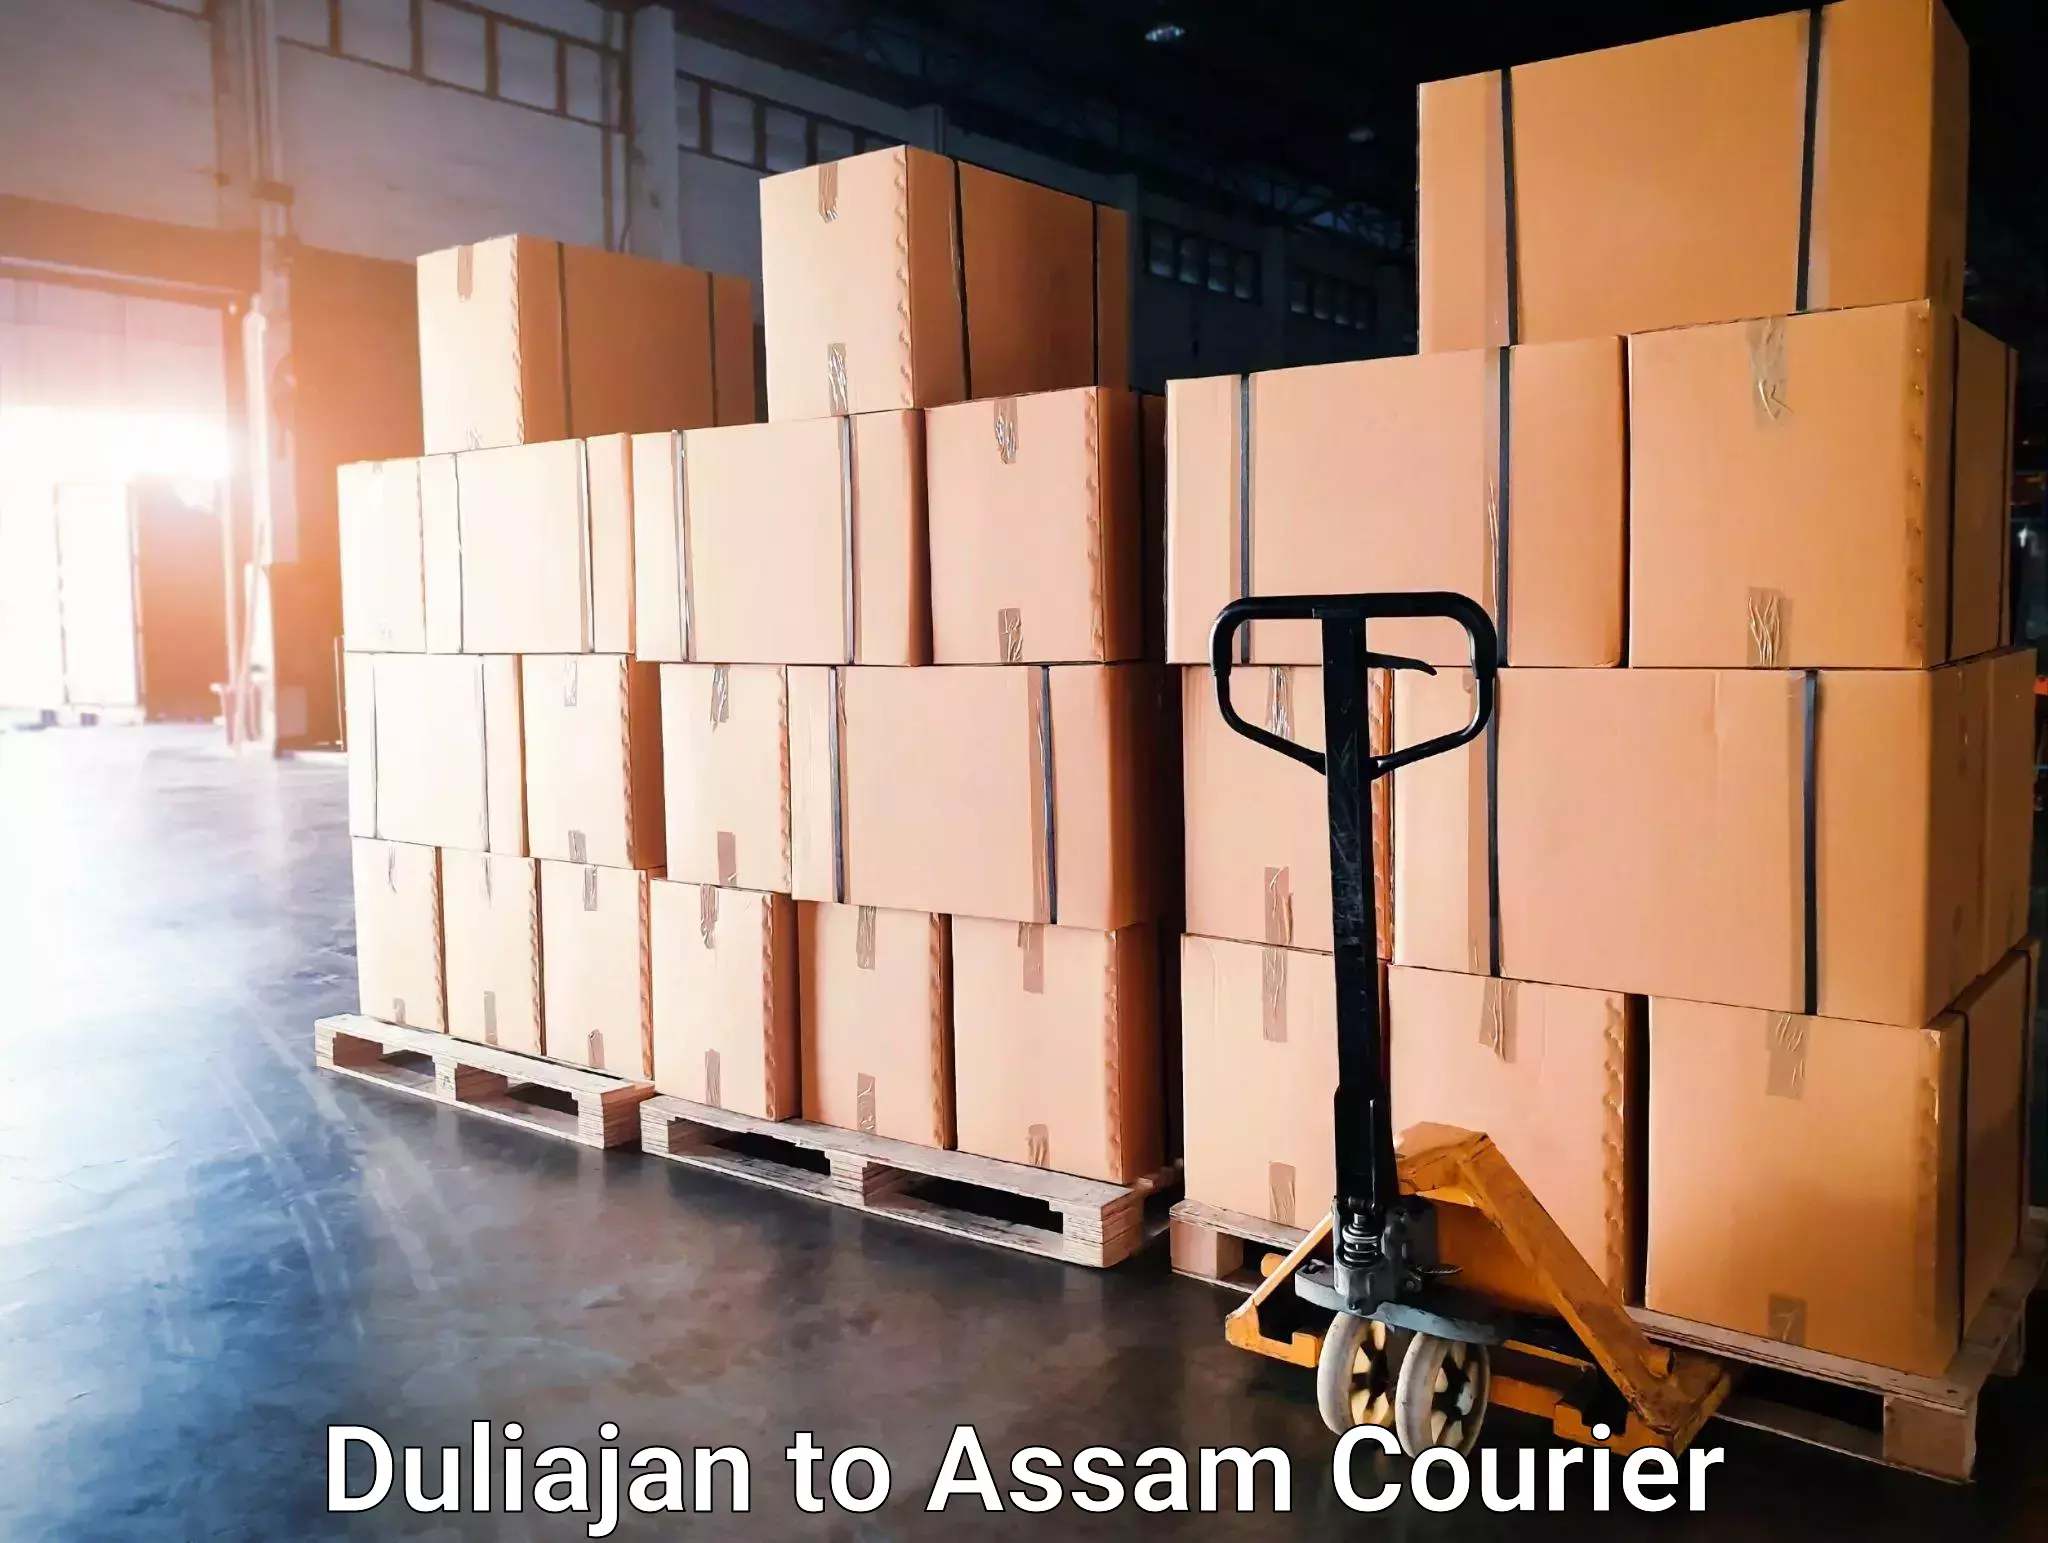 Courier membership Duliajan to Kokrajhar